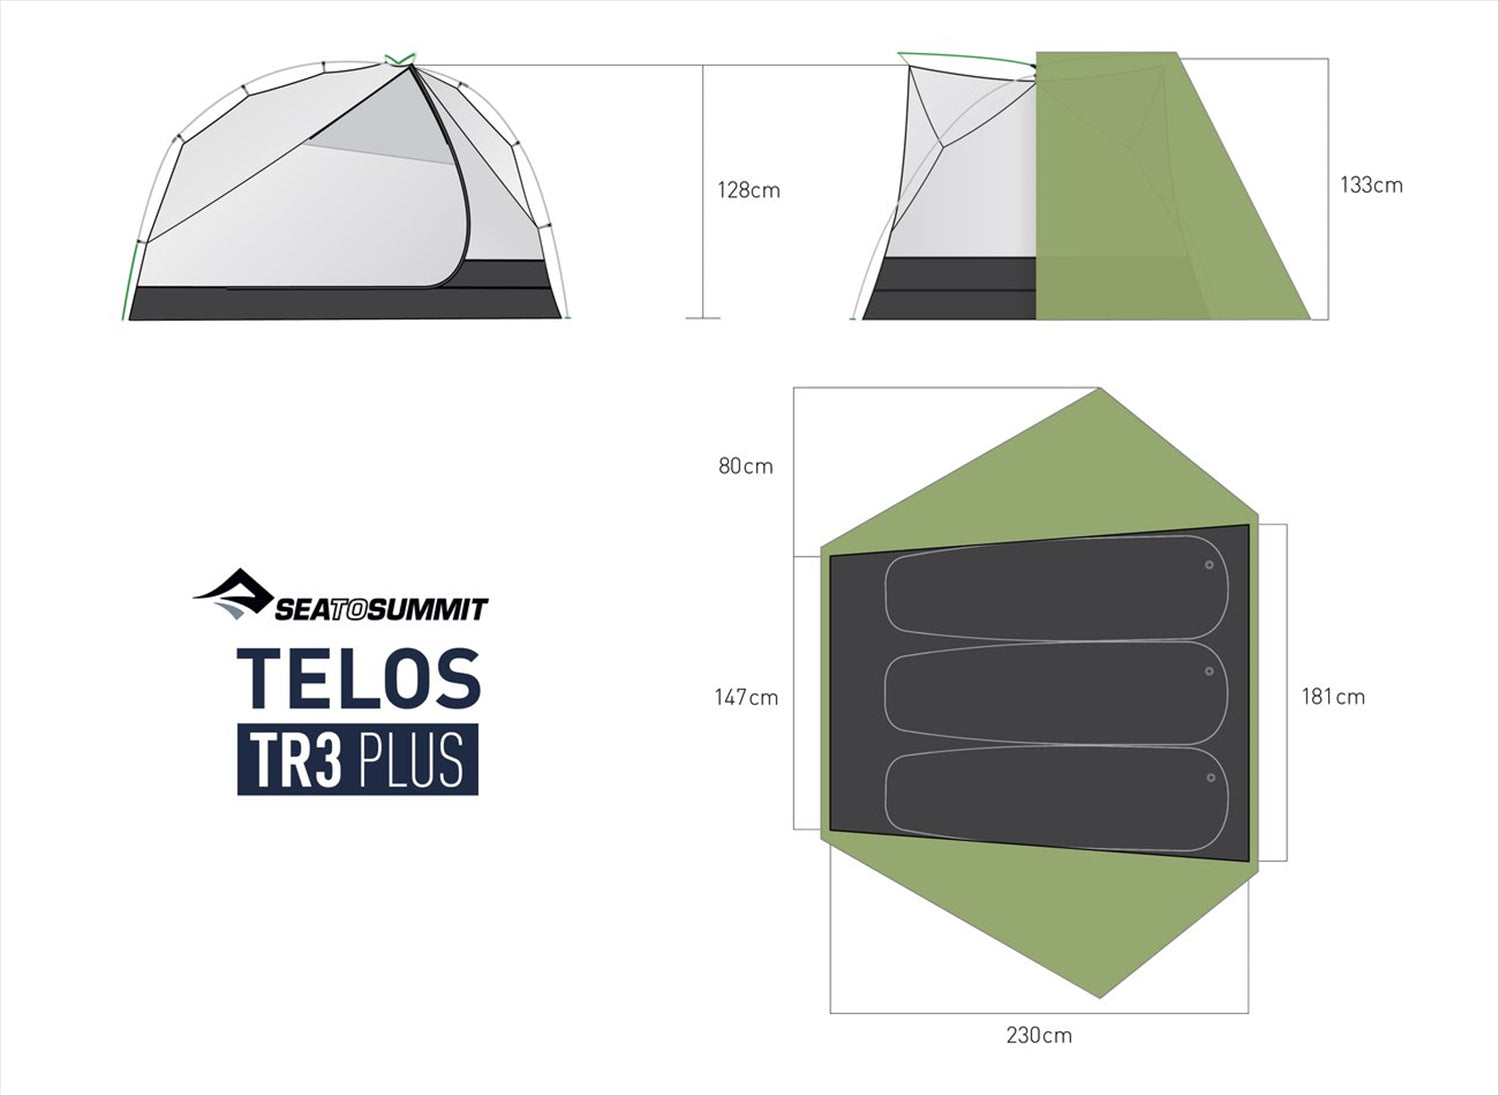 Sea to Summit Sea To Summit Telos TR3 Plus 3 Person Ultralight Tent 2.23kg